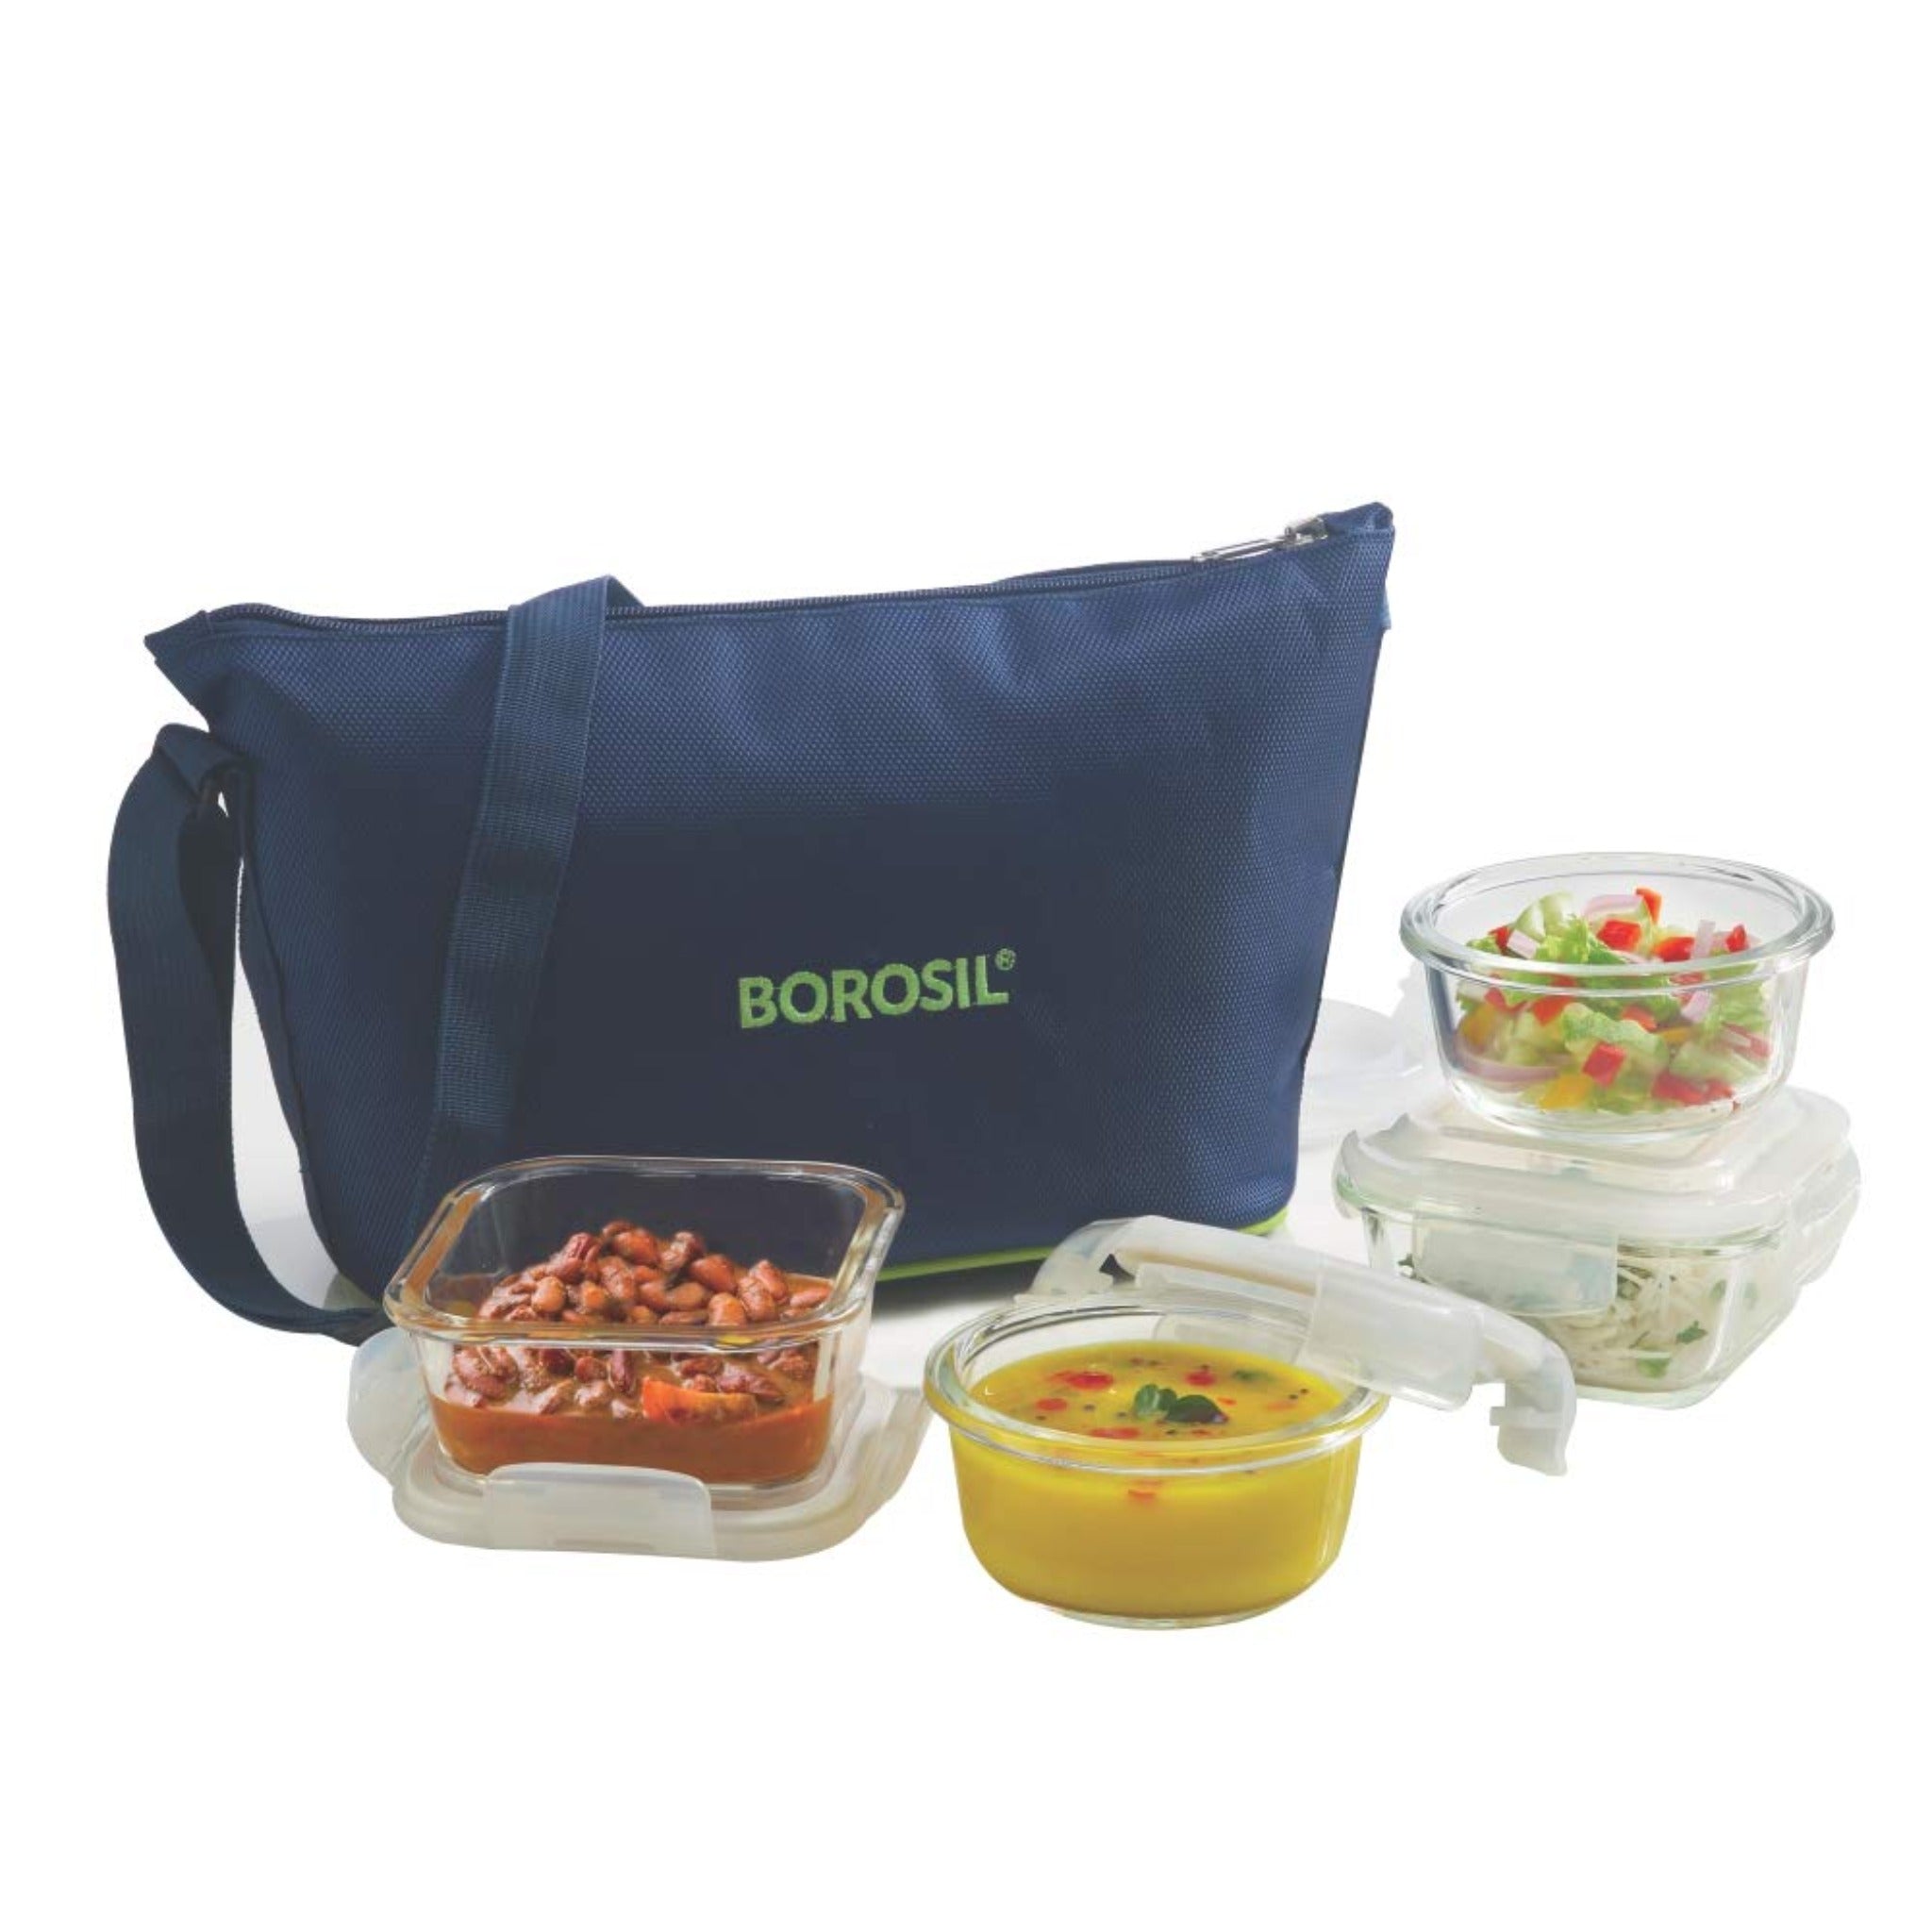 Borosil Microwavavle Glass Lunch Box